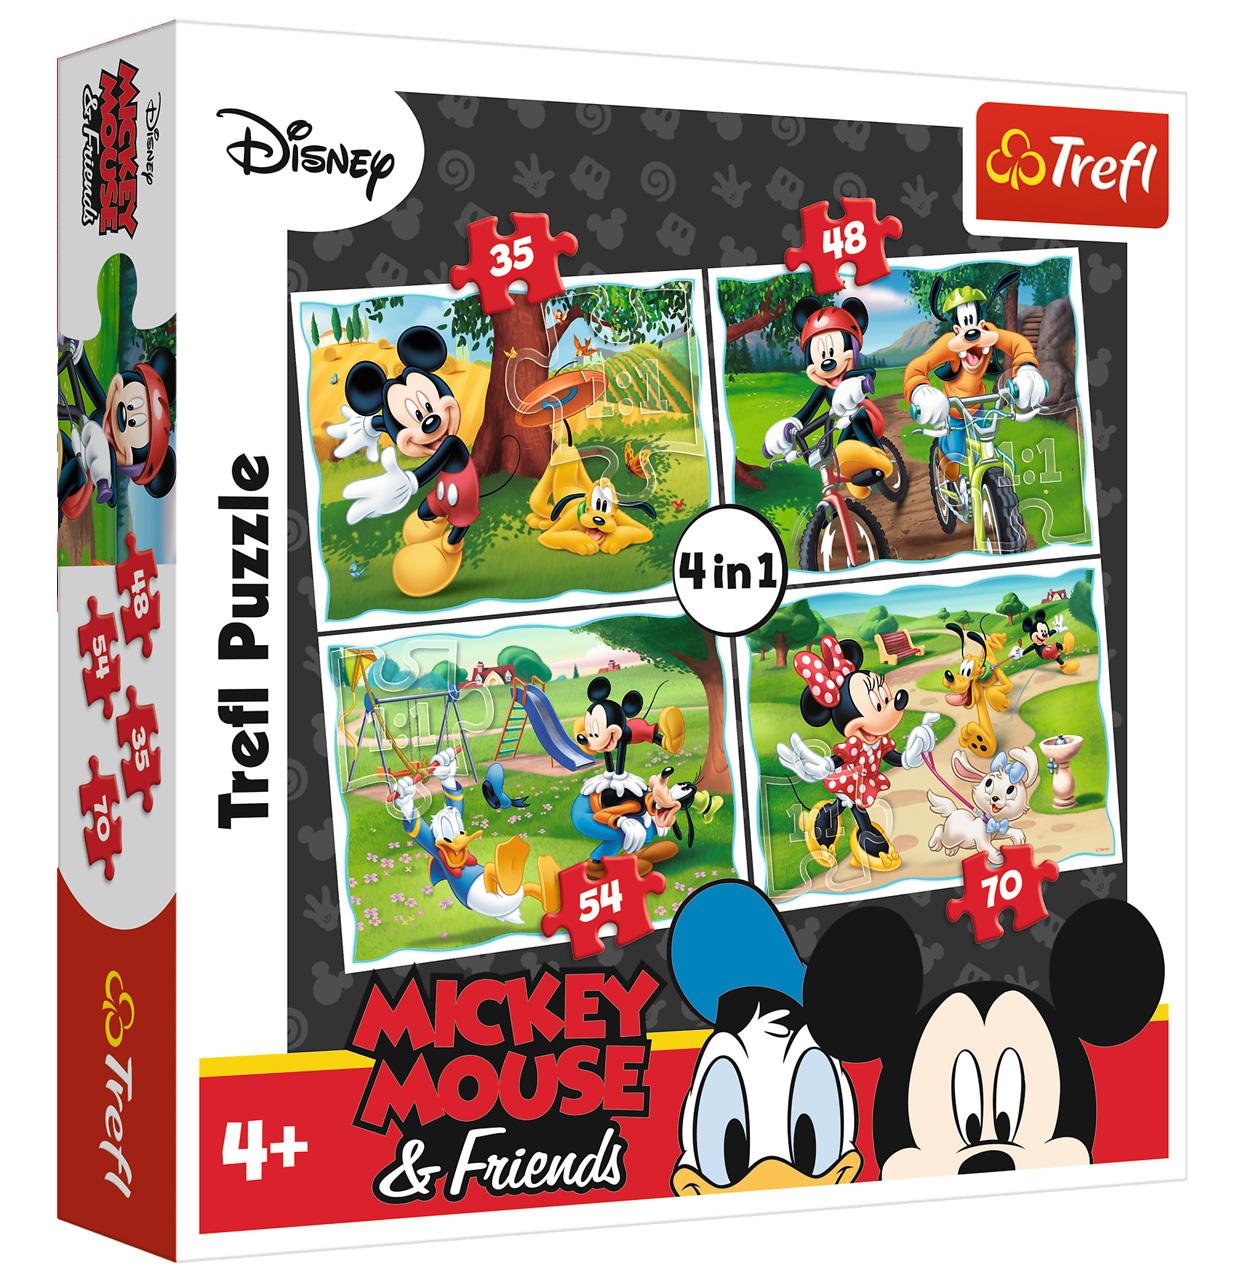 Trefl Çocuk Puzzle 34261 Mickey Mouse & Friends, Disney 35+48+54+70 Parça 4 in 1 Puzzle